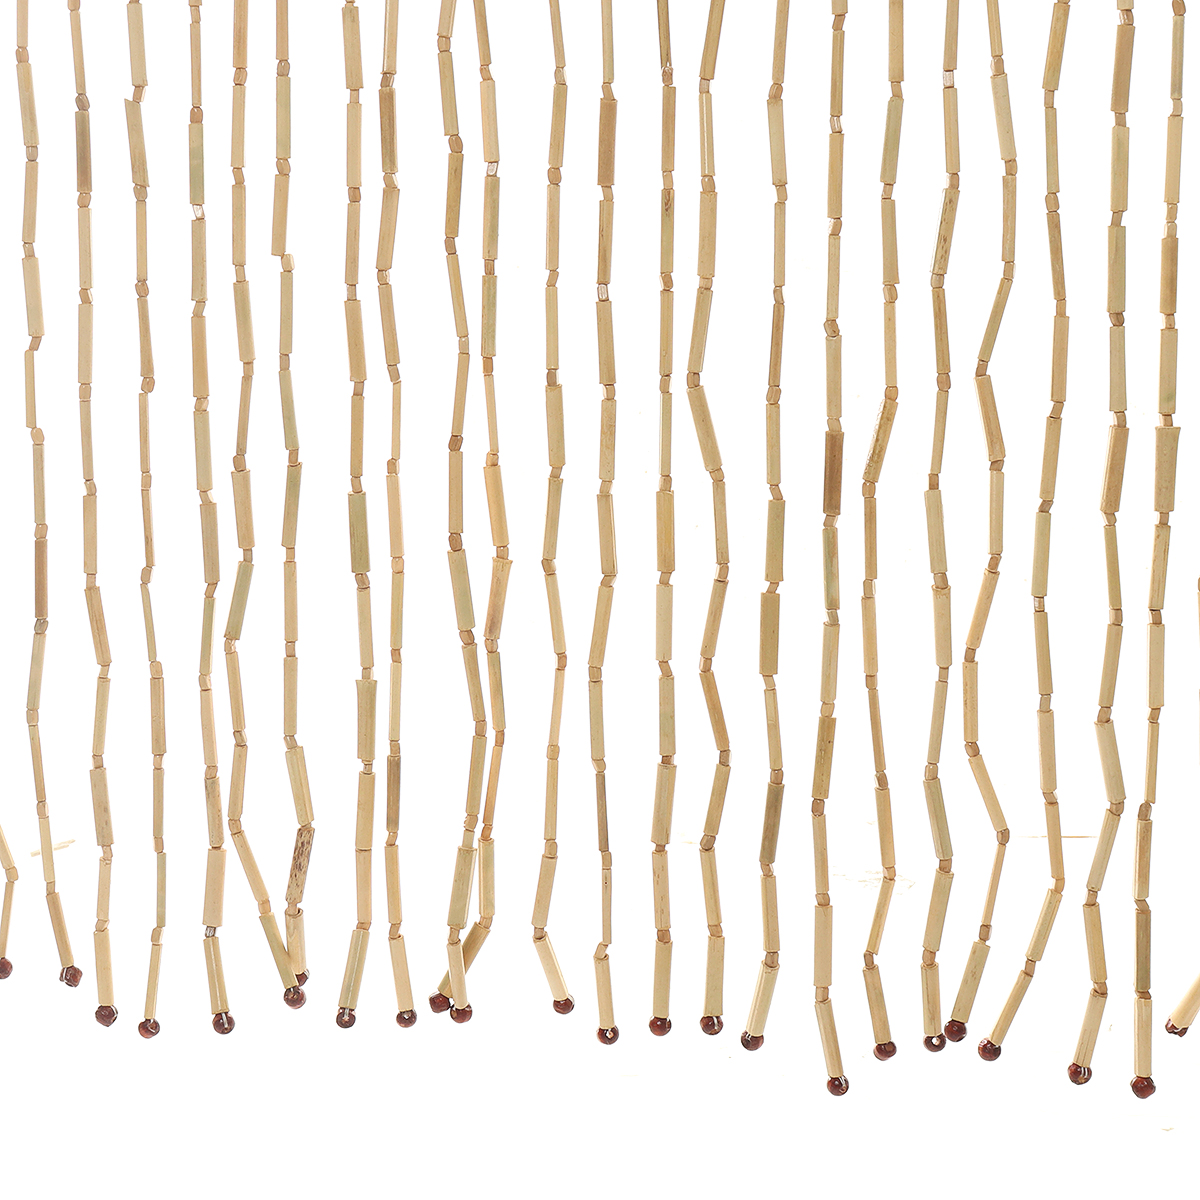 Natural Bamboo Curtains Blinds Door Room Divider 31 Strands